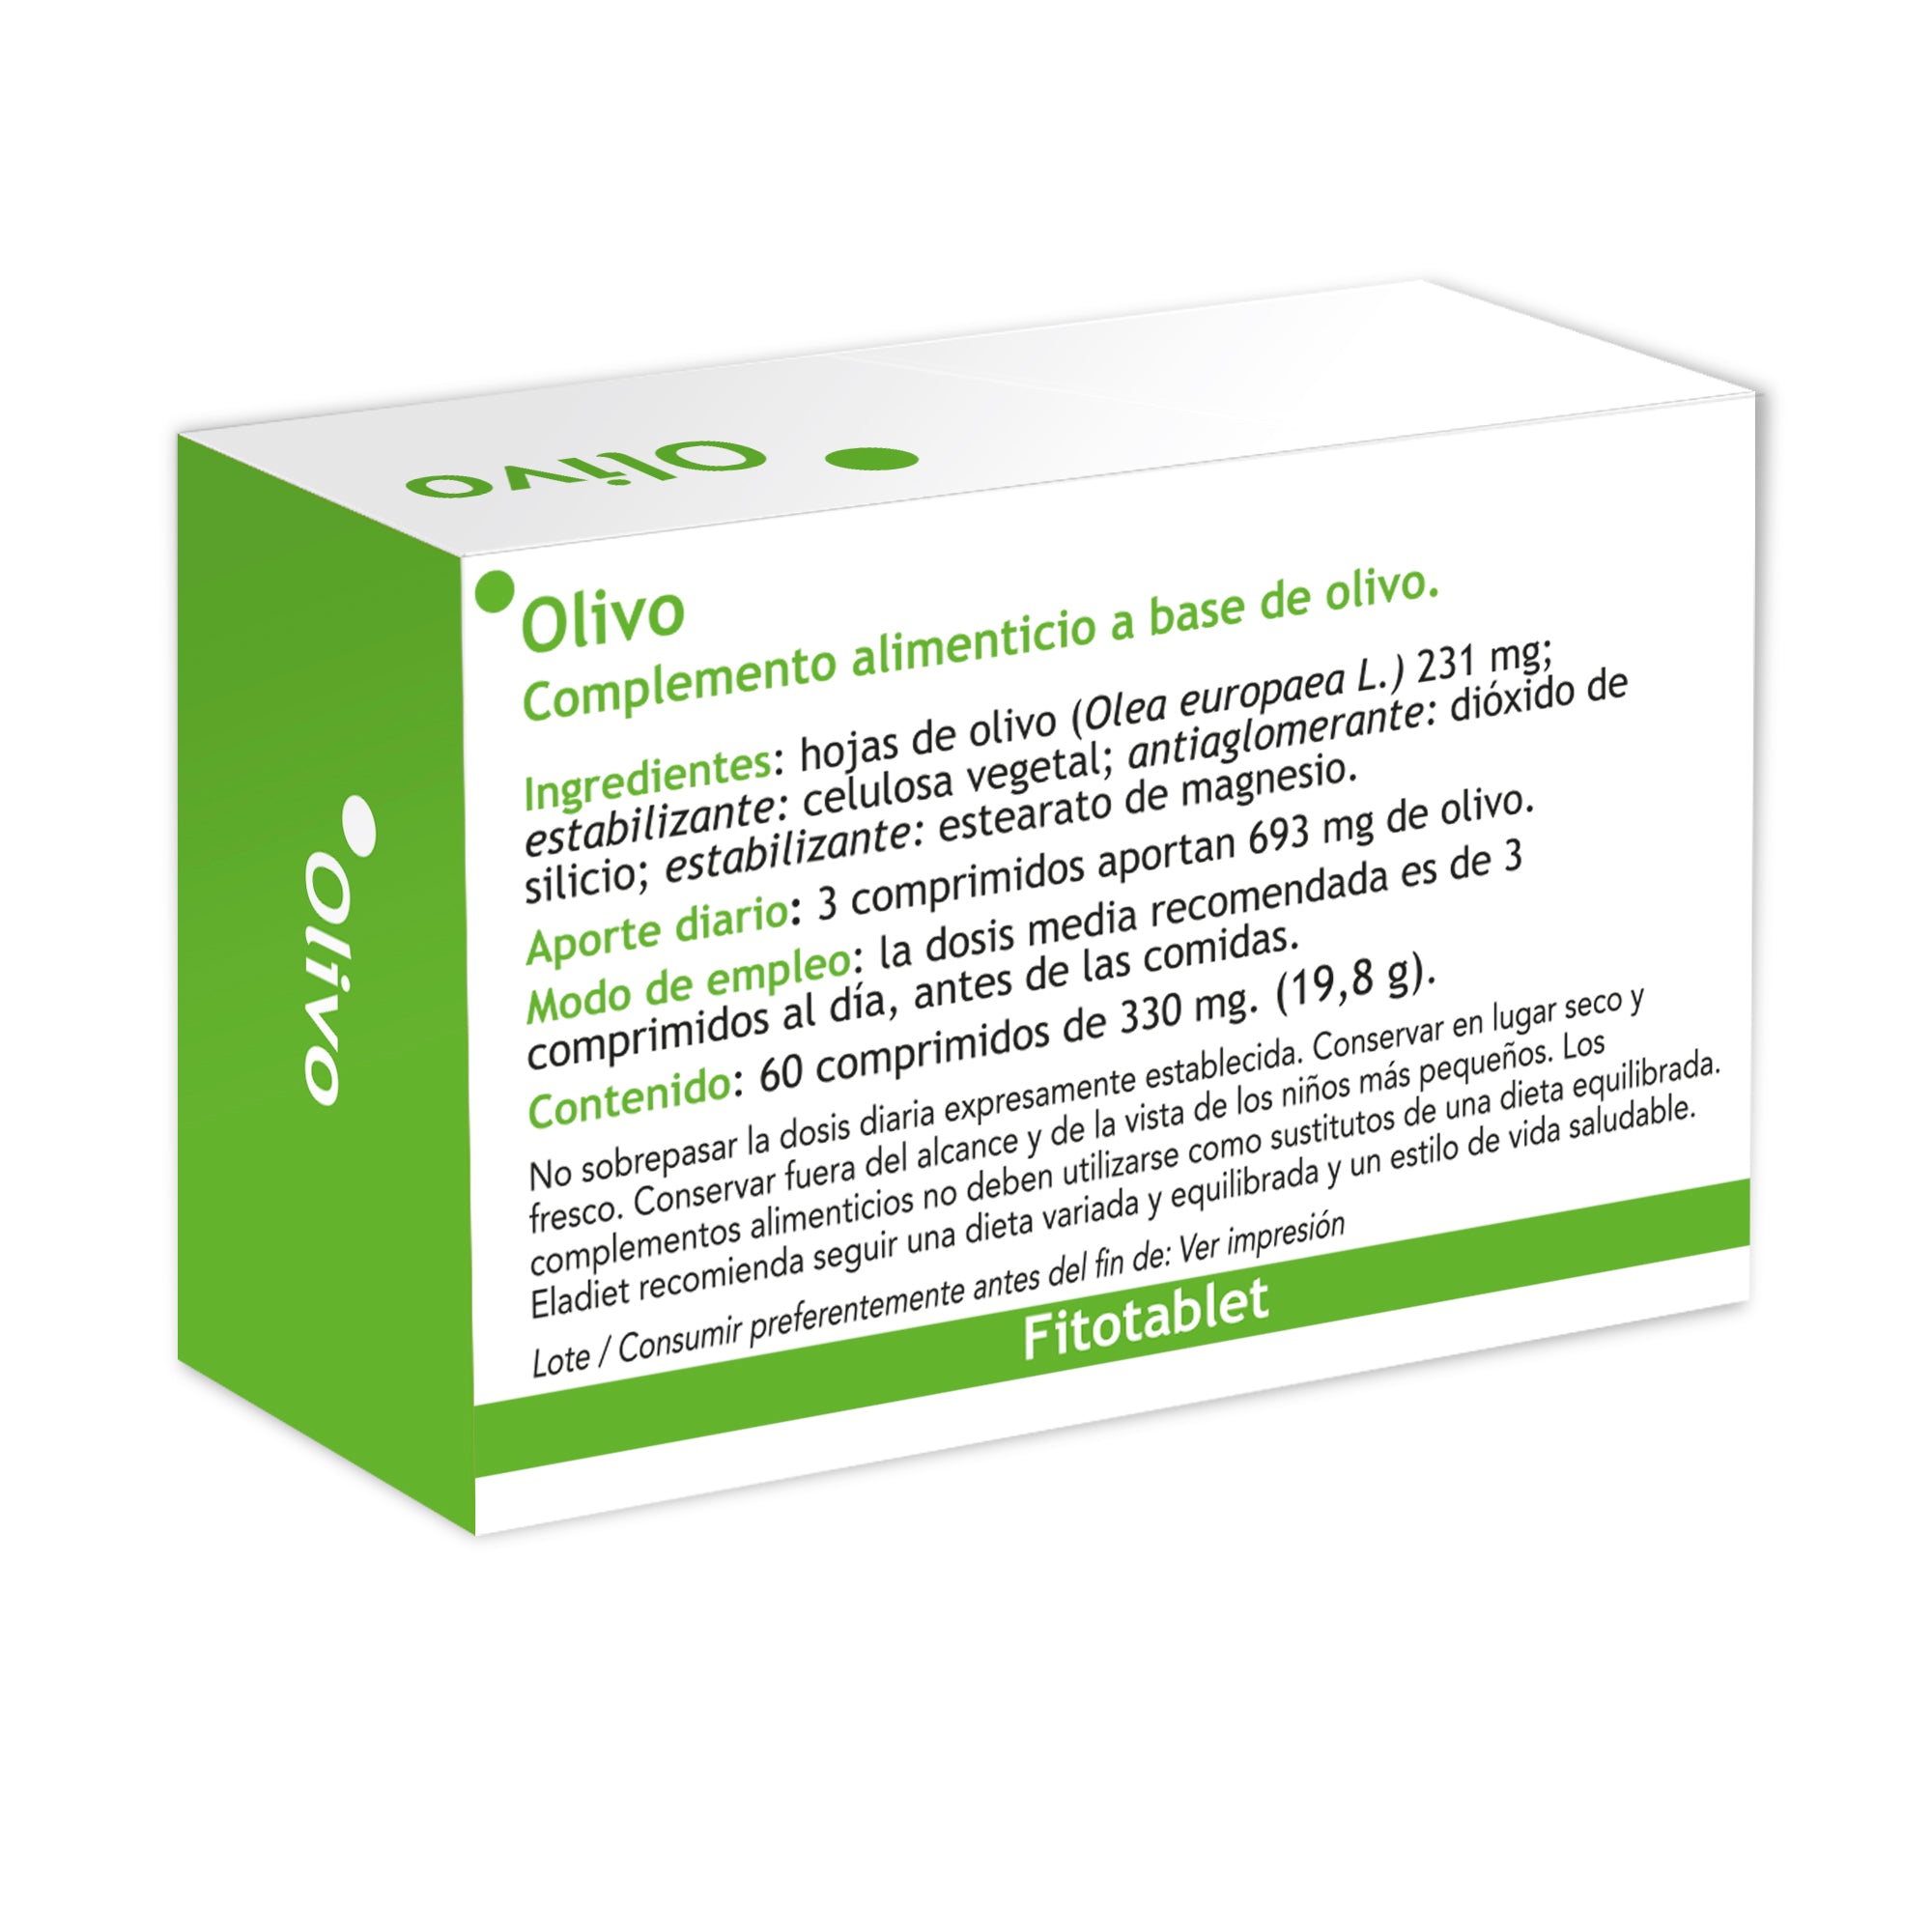 Eladiet - Fitotablet Olivo 330Mg 60 Comprimidos - Biopharmacia, Parafarmacia online